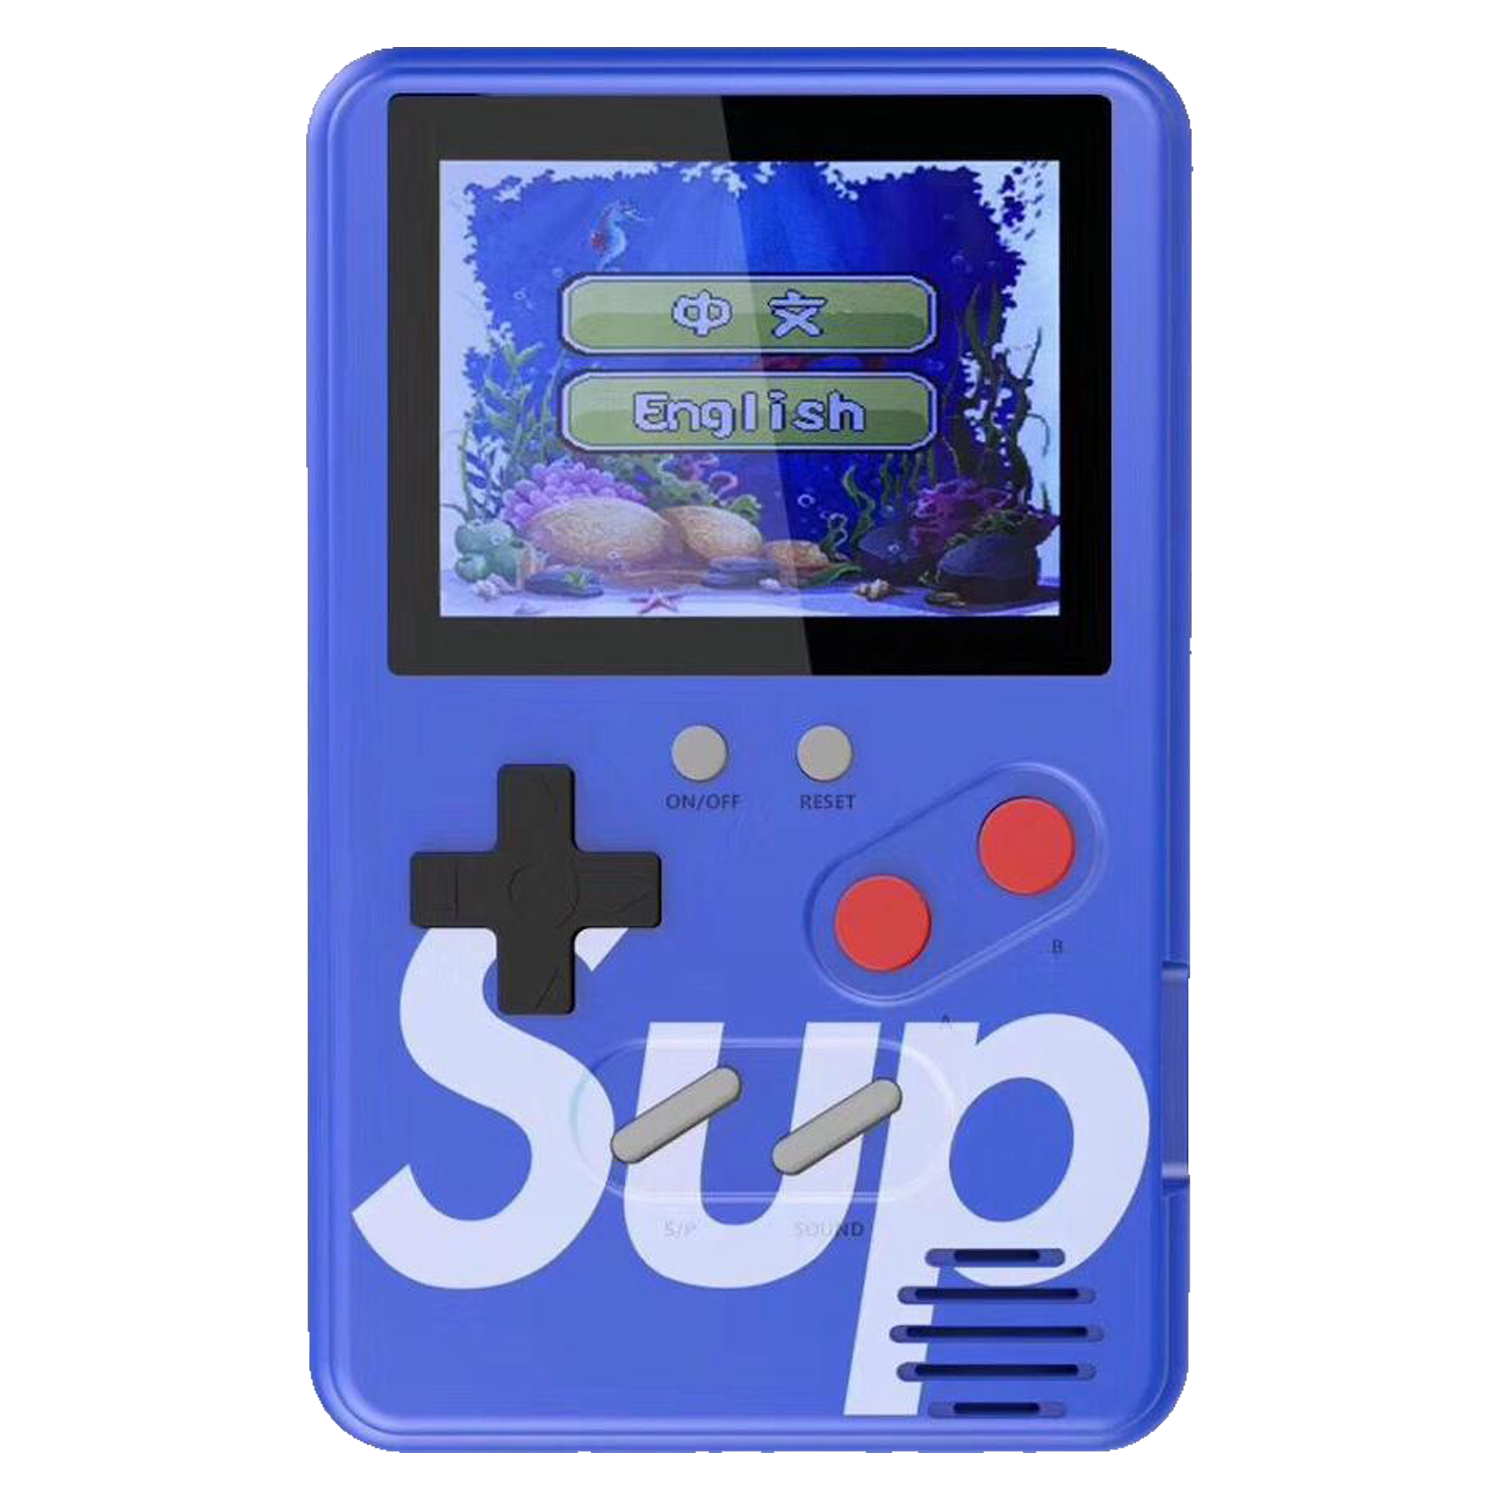 Console Game Boy Wanle Sup Slim 500 Jogos em 1 - Azul